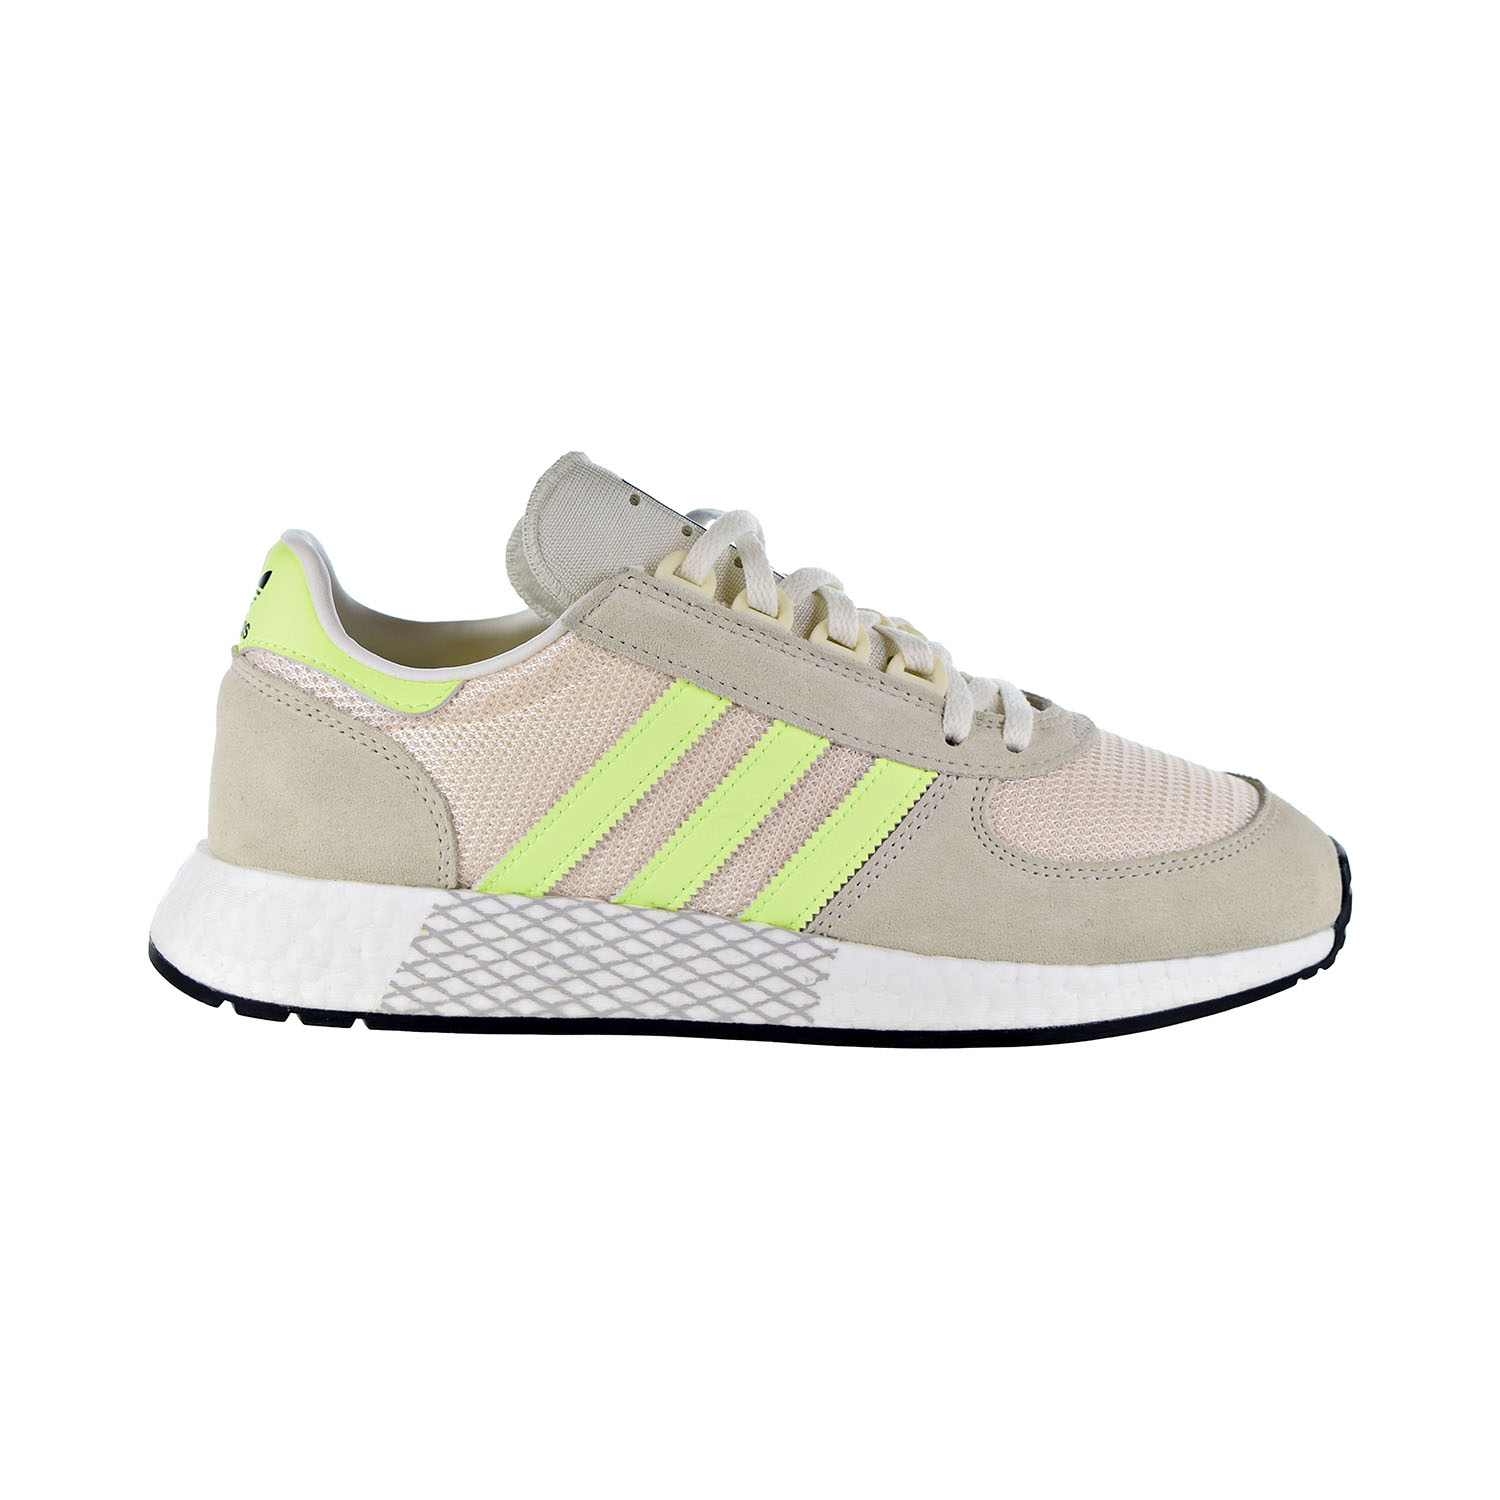 Adidas Marathon Tech Men's Shoes Clear Brown-Hi-Res Yellow G27418 | eBay